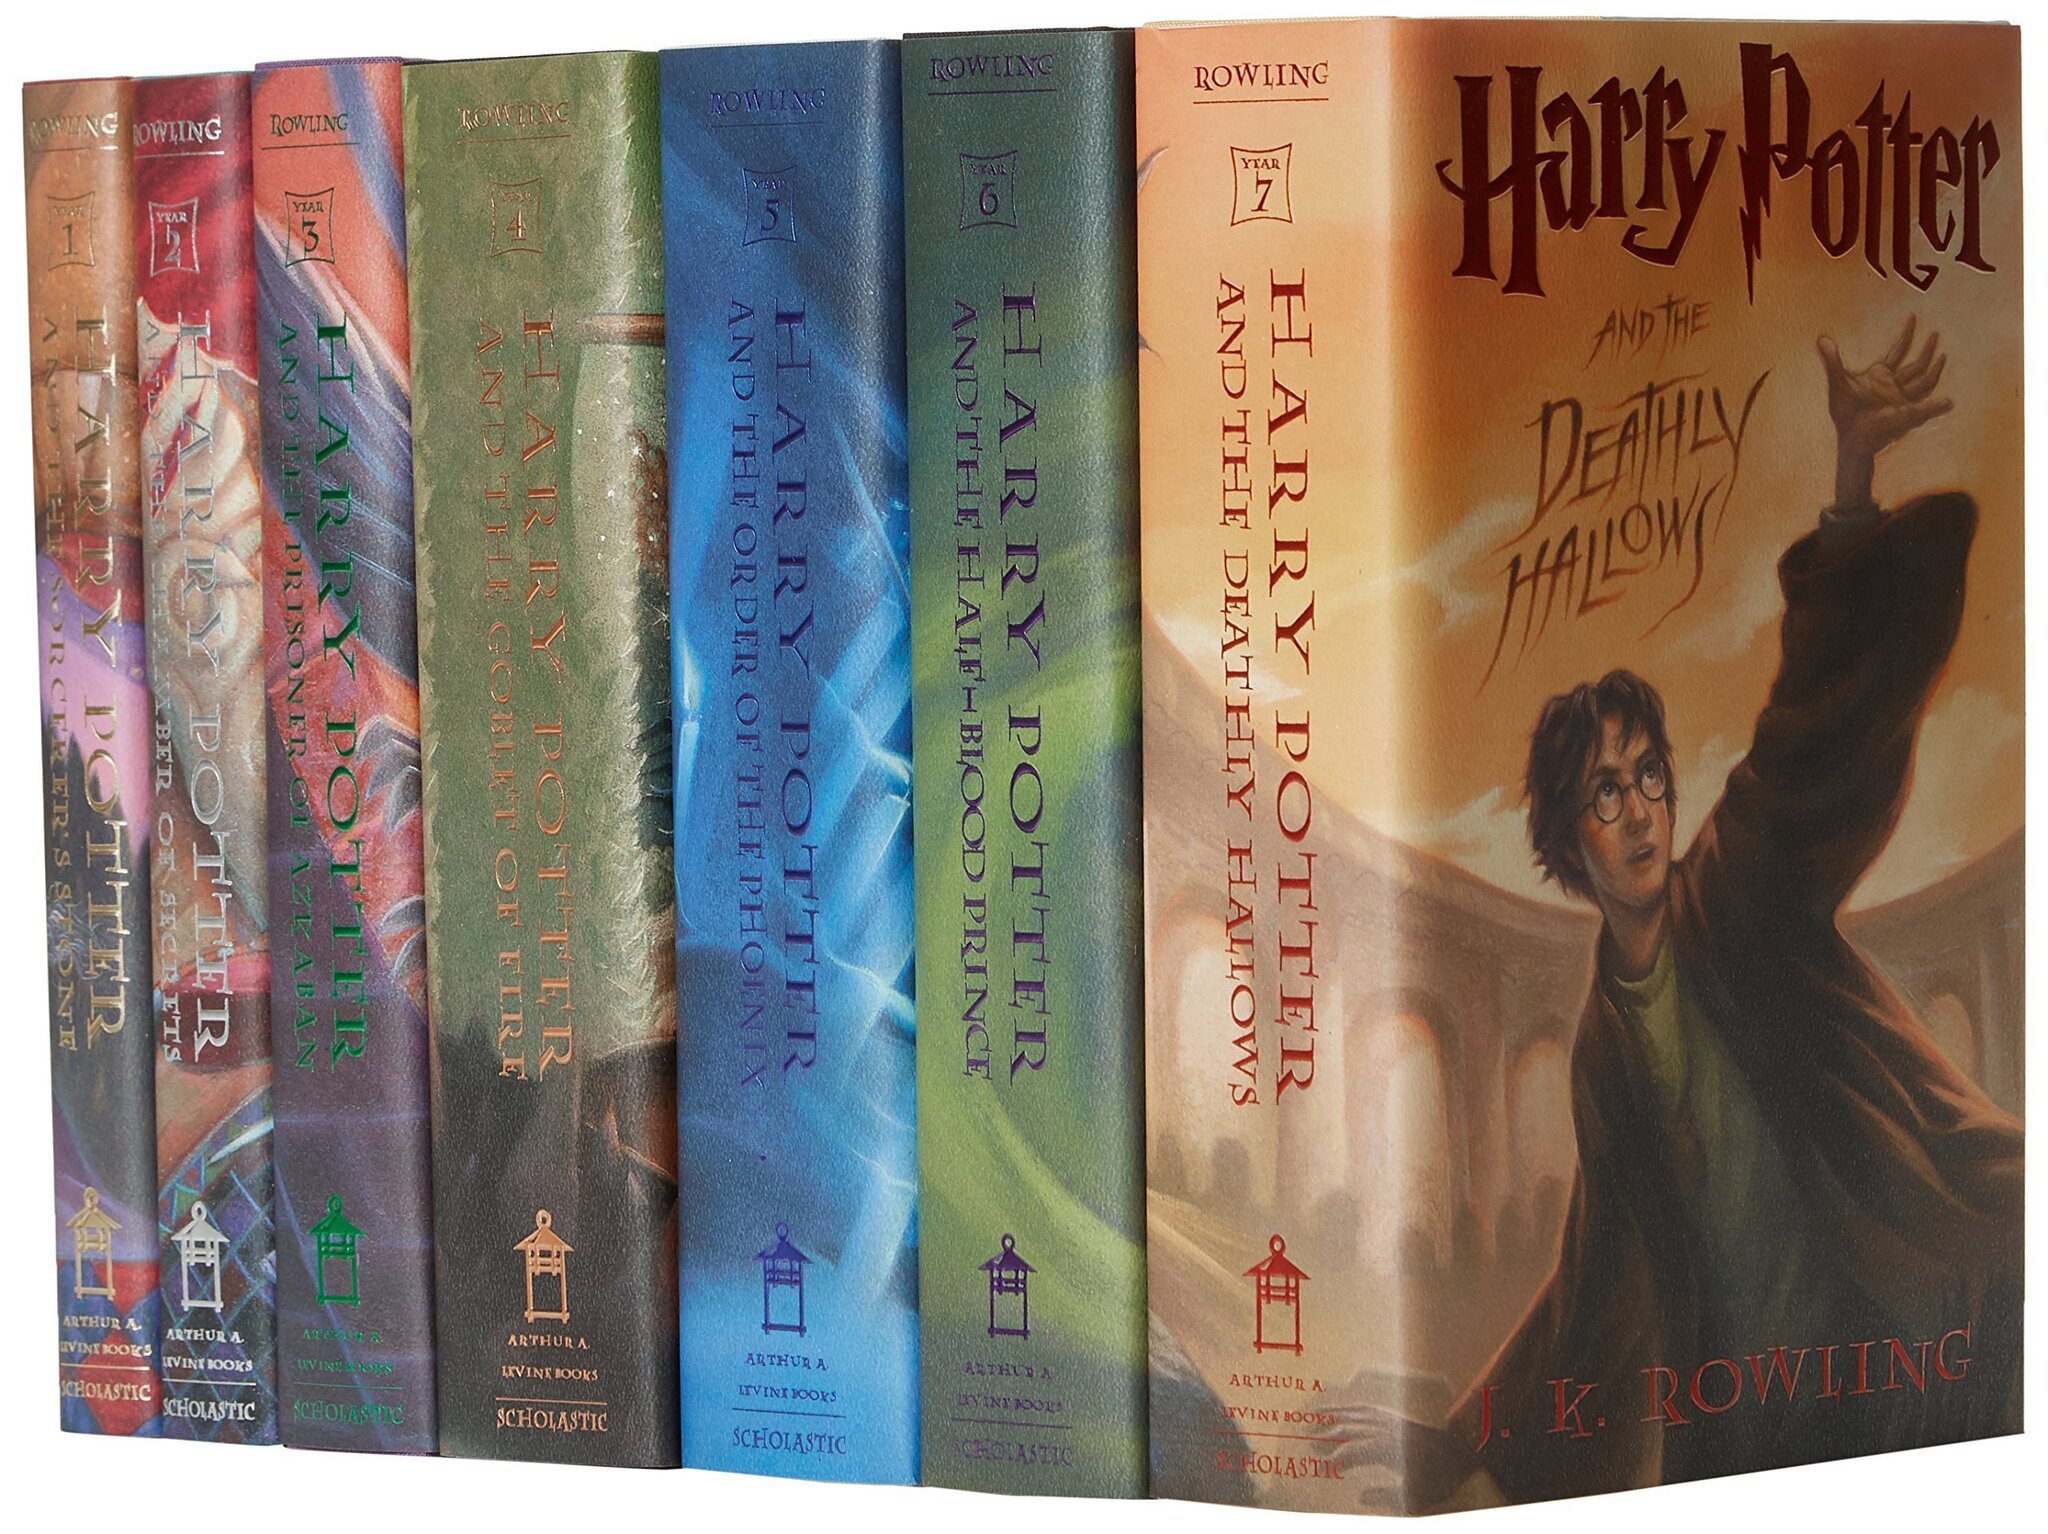 Harry potter books - thebignelo